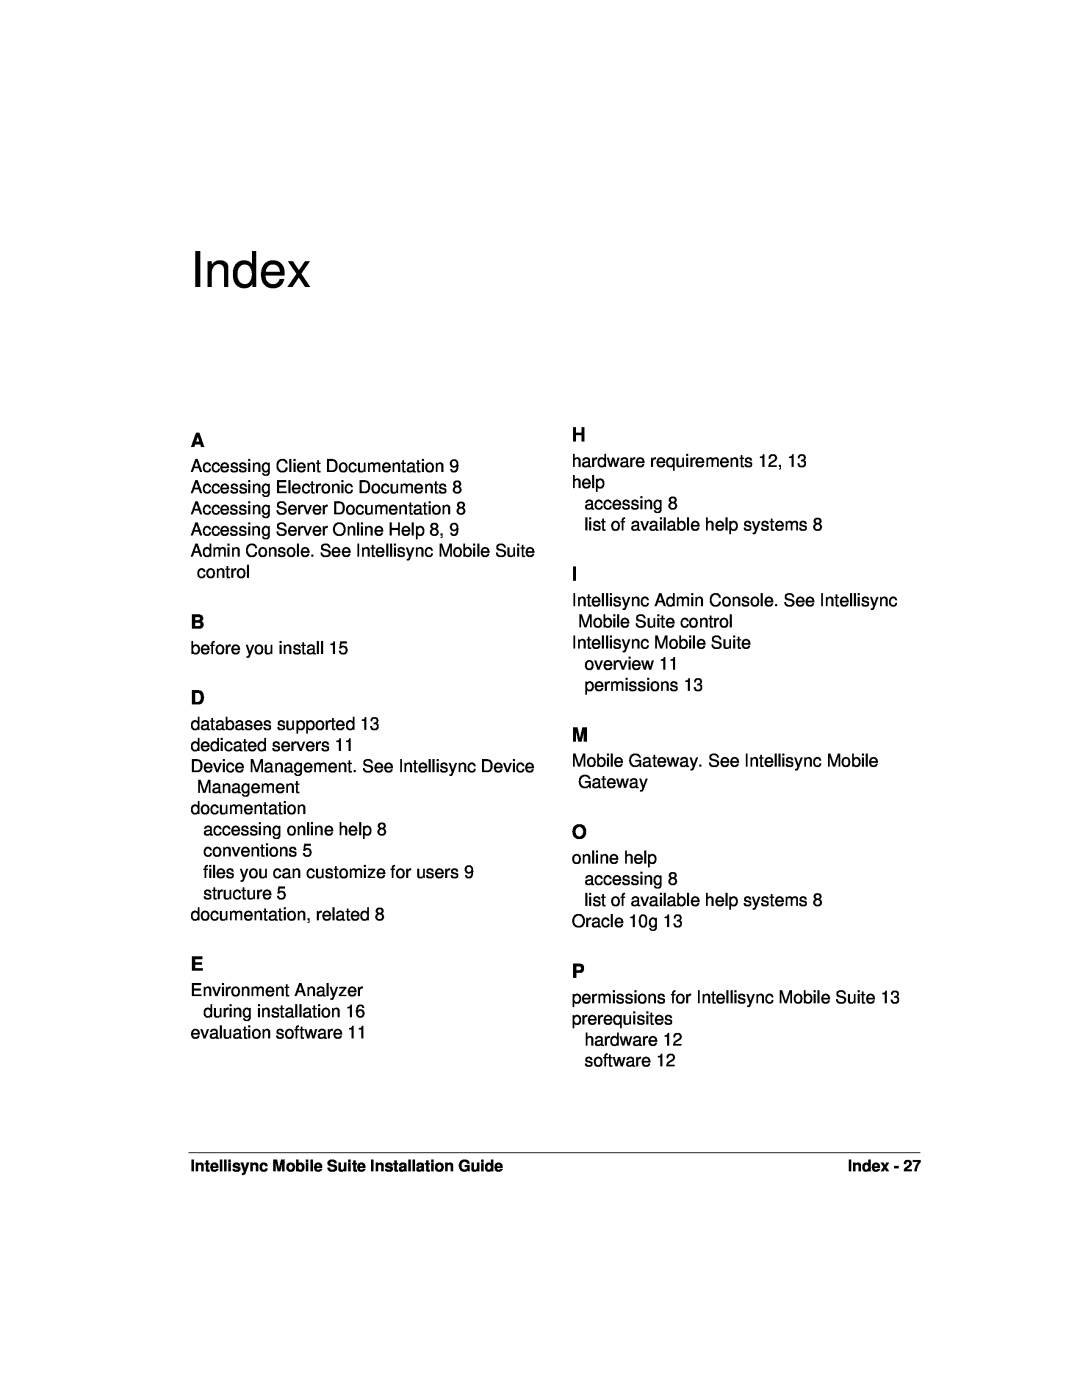 Nokia 8.5 manual Index 